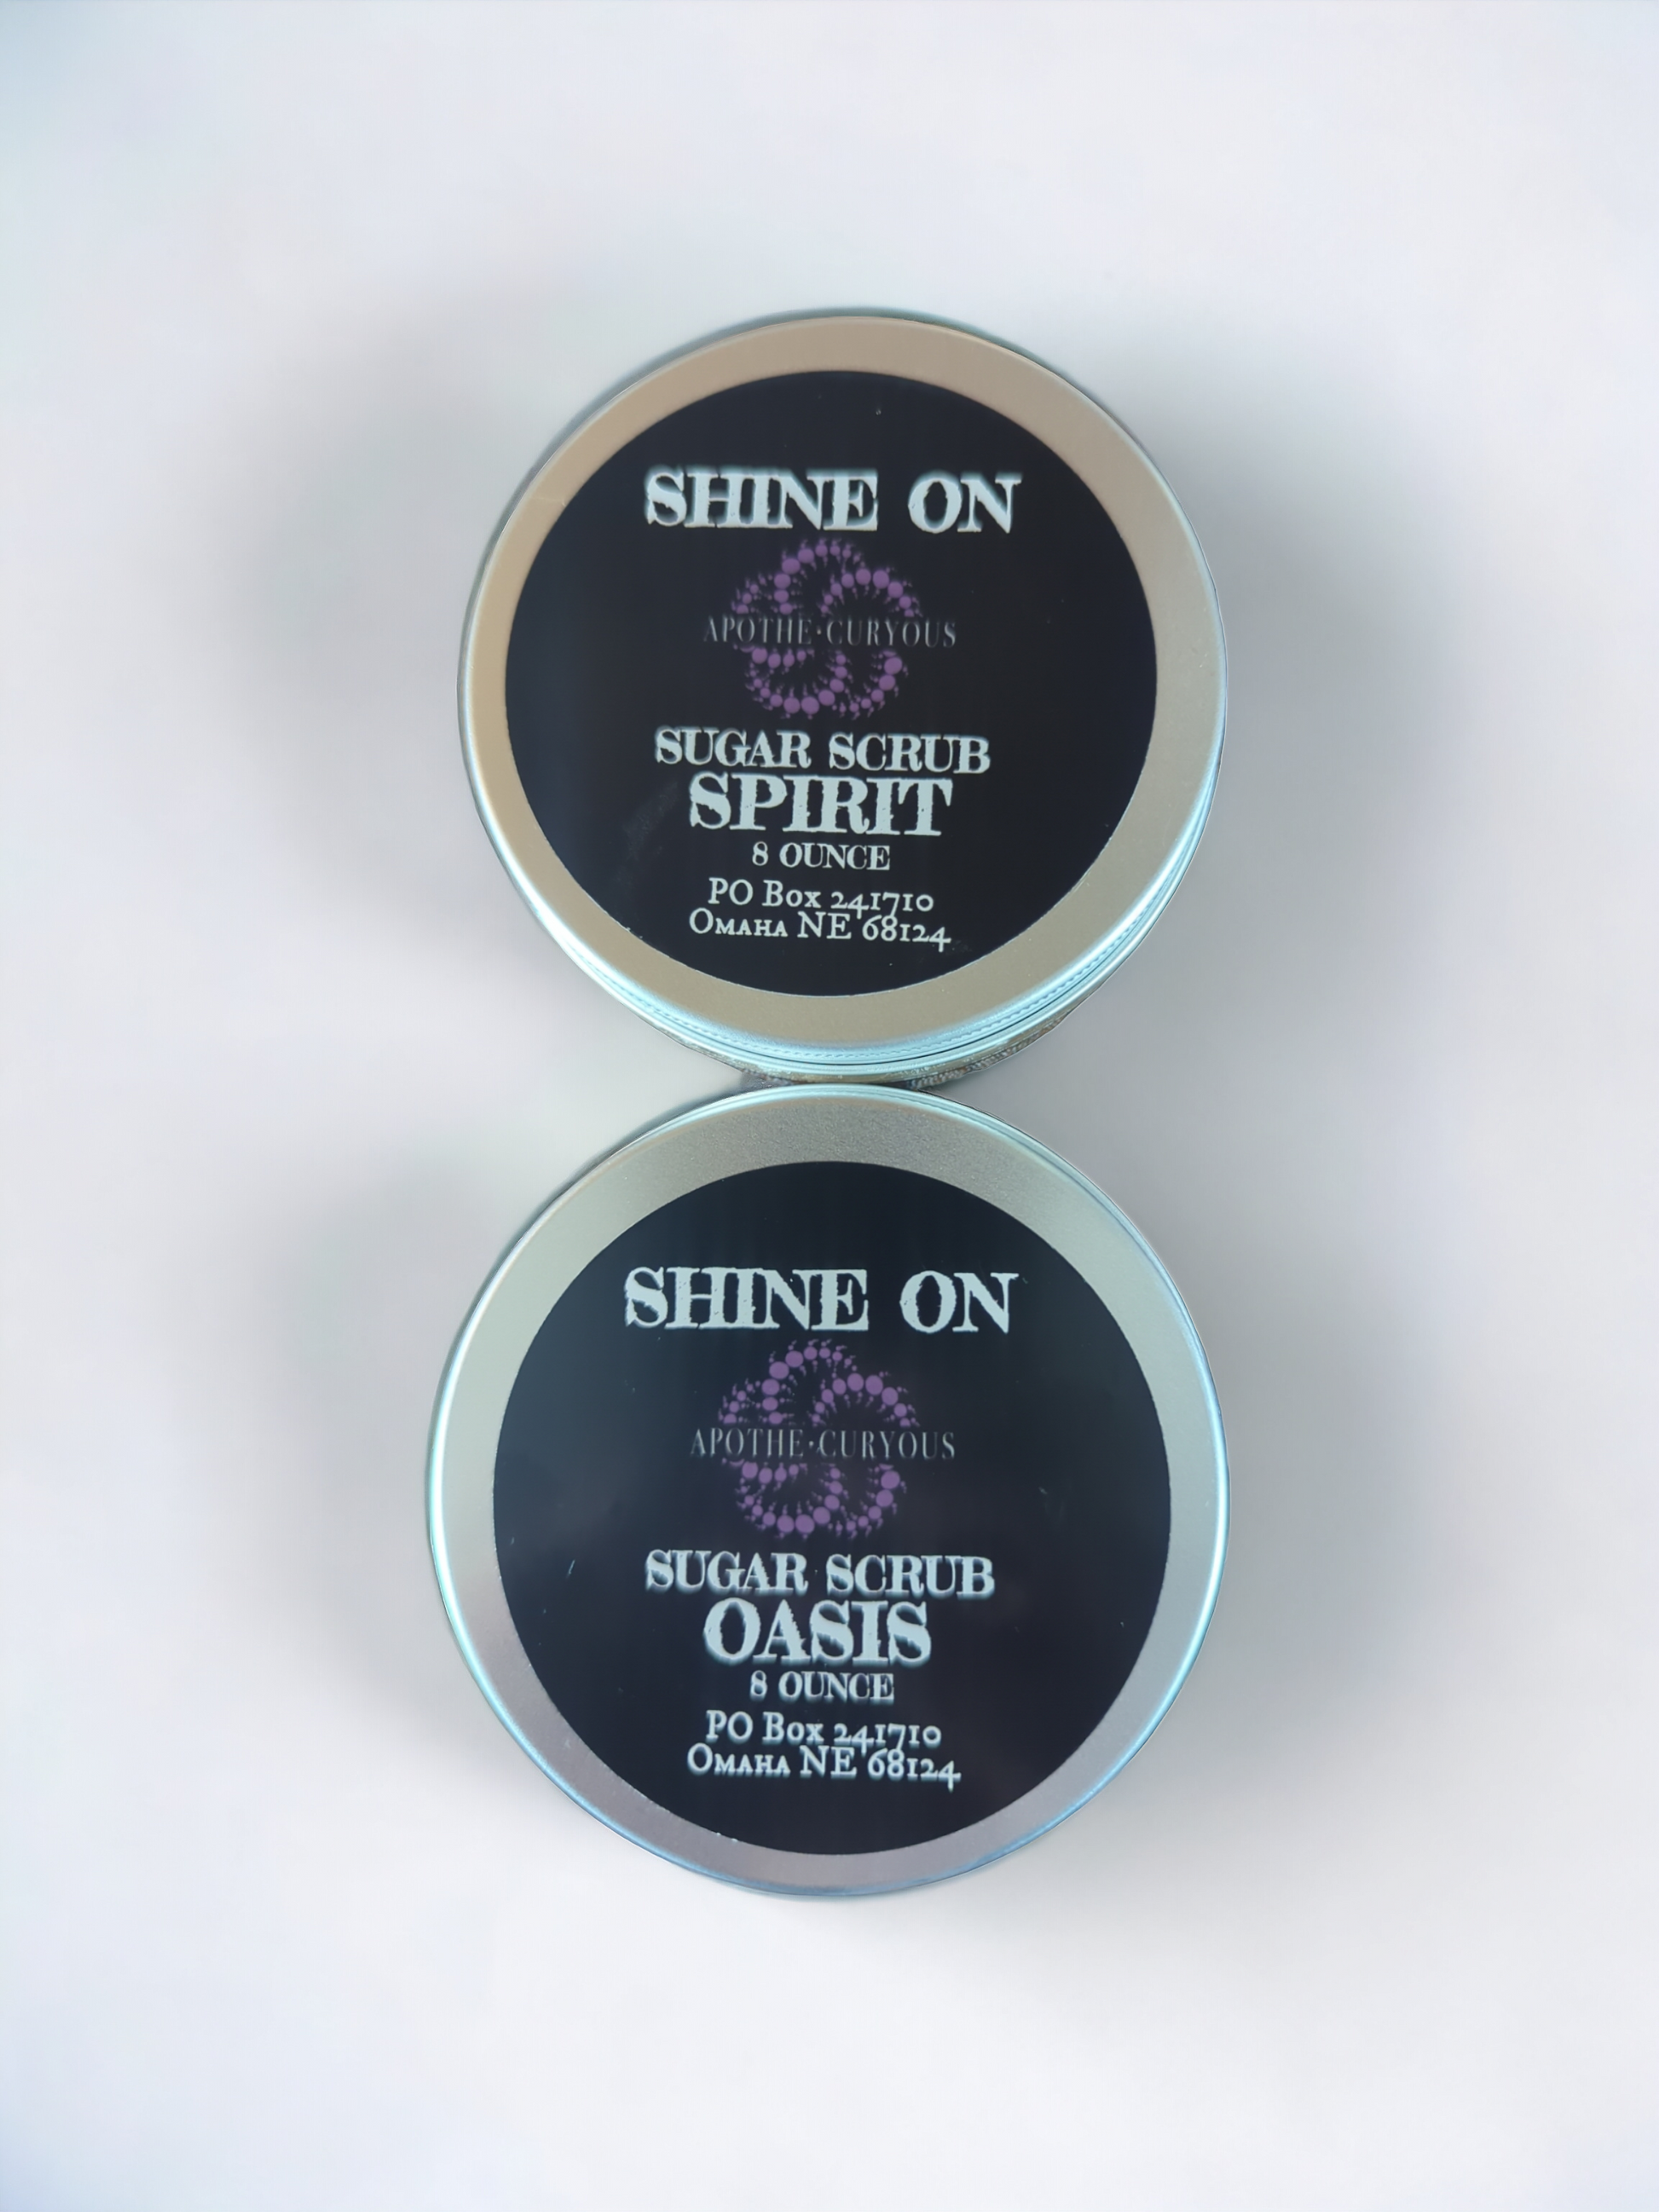 Shine On sugar scrub, 2 scent options, Apothecuryous